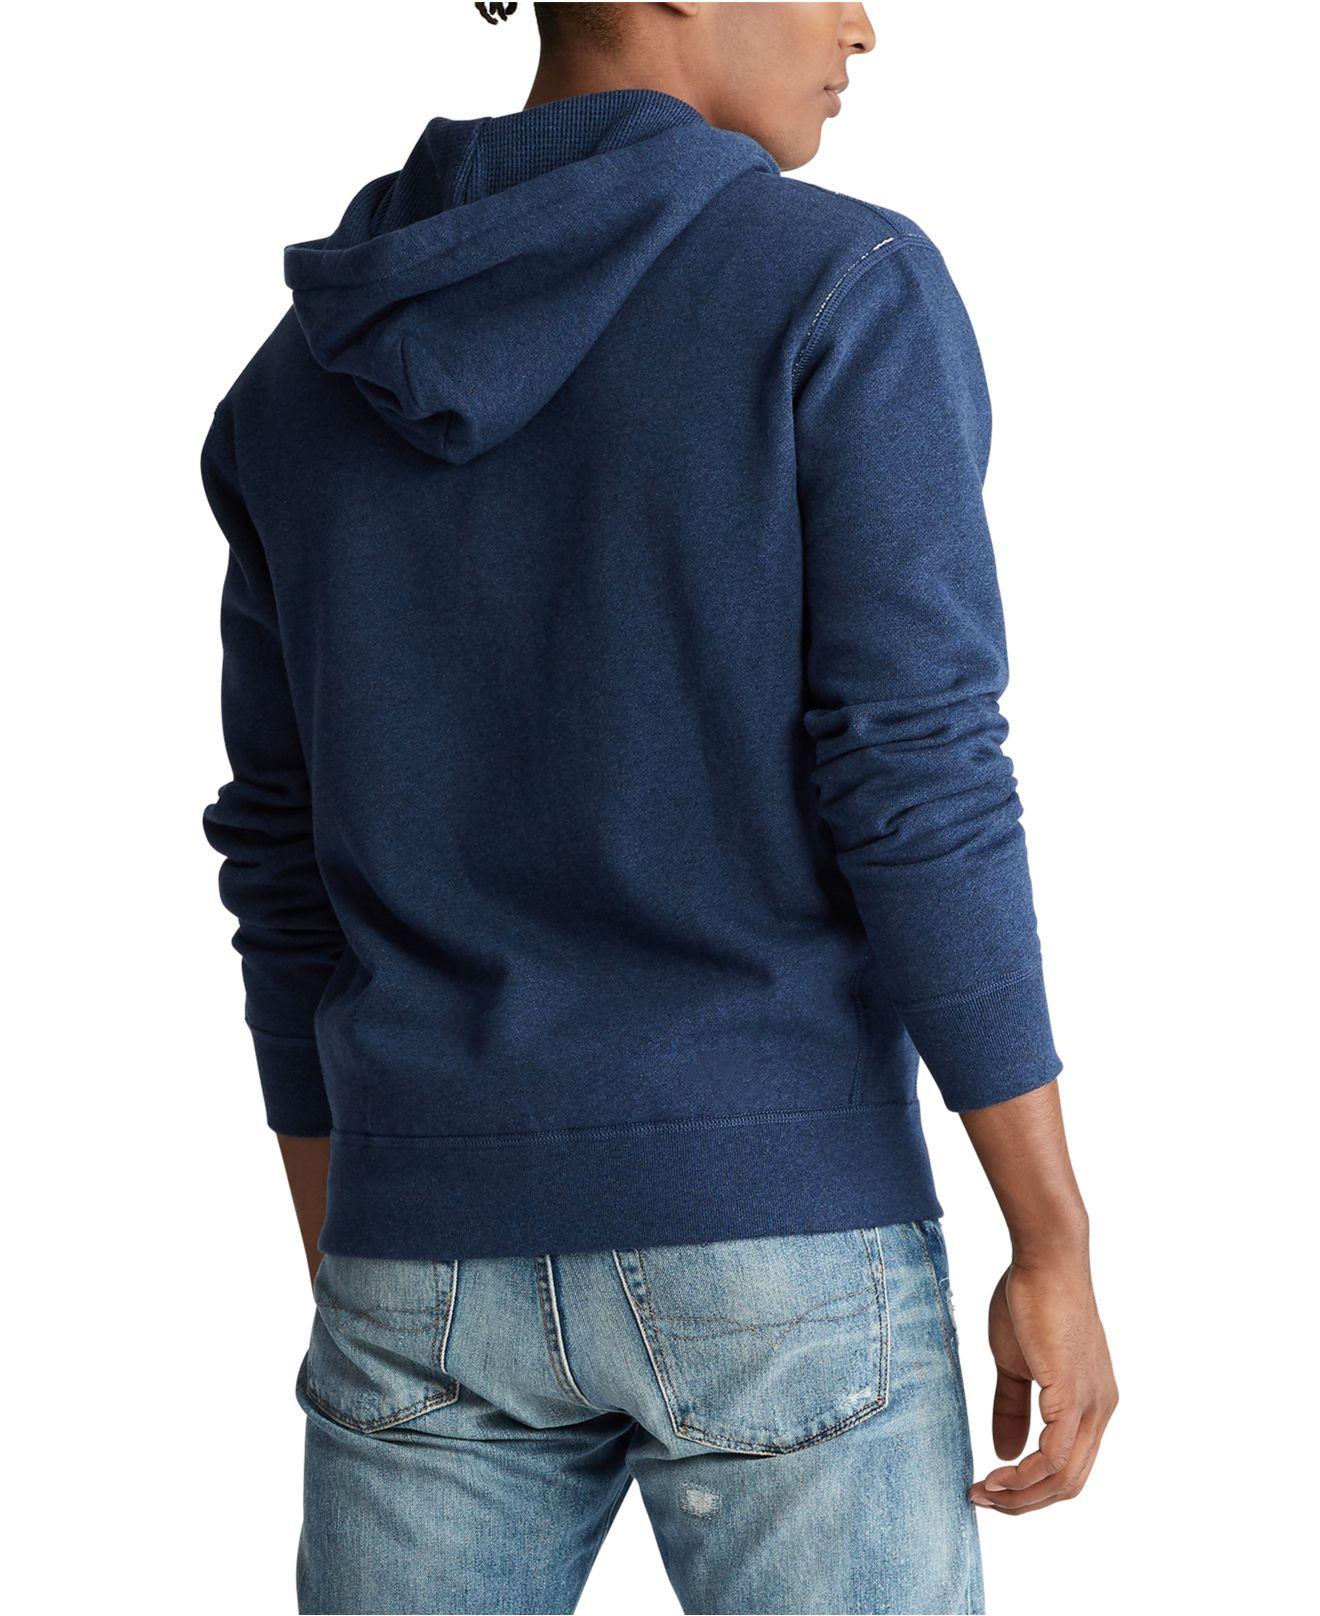 Polo Ralph Lauren Cotton-blend Fleece Hoodie in Blue for Men - Lyst